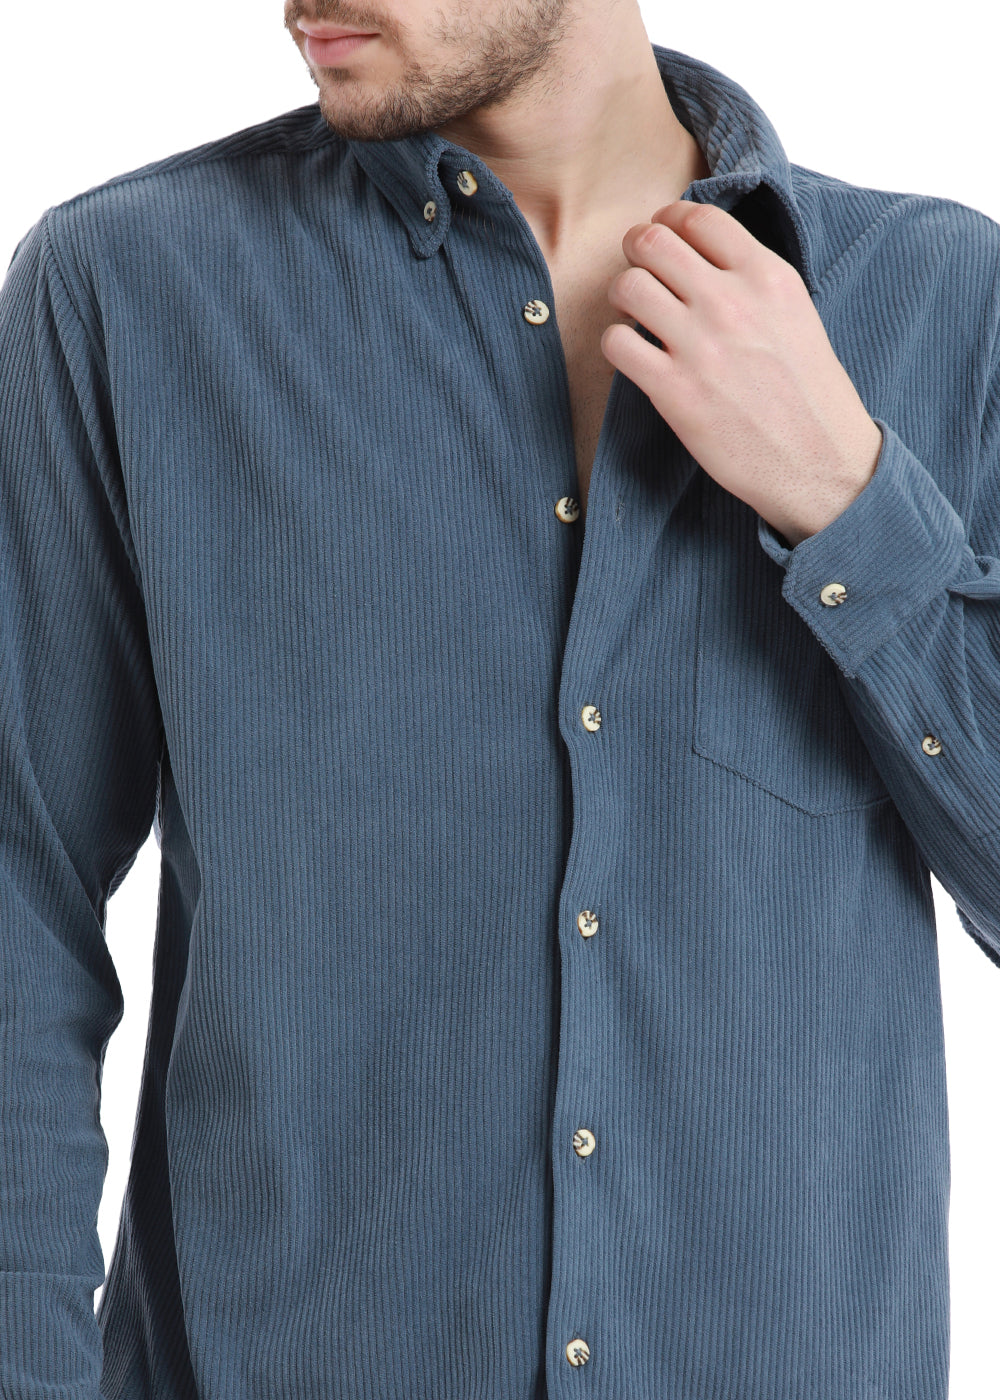 French Blue Corduroy Shirt